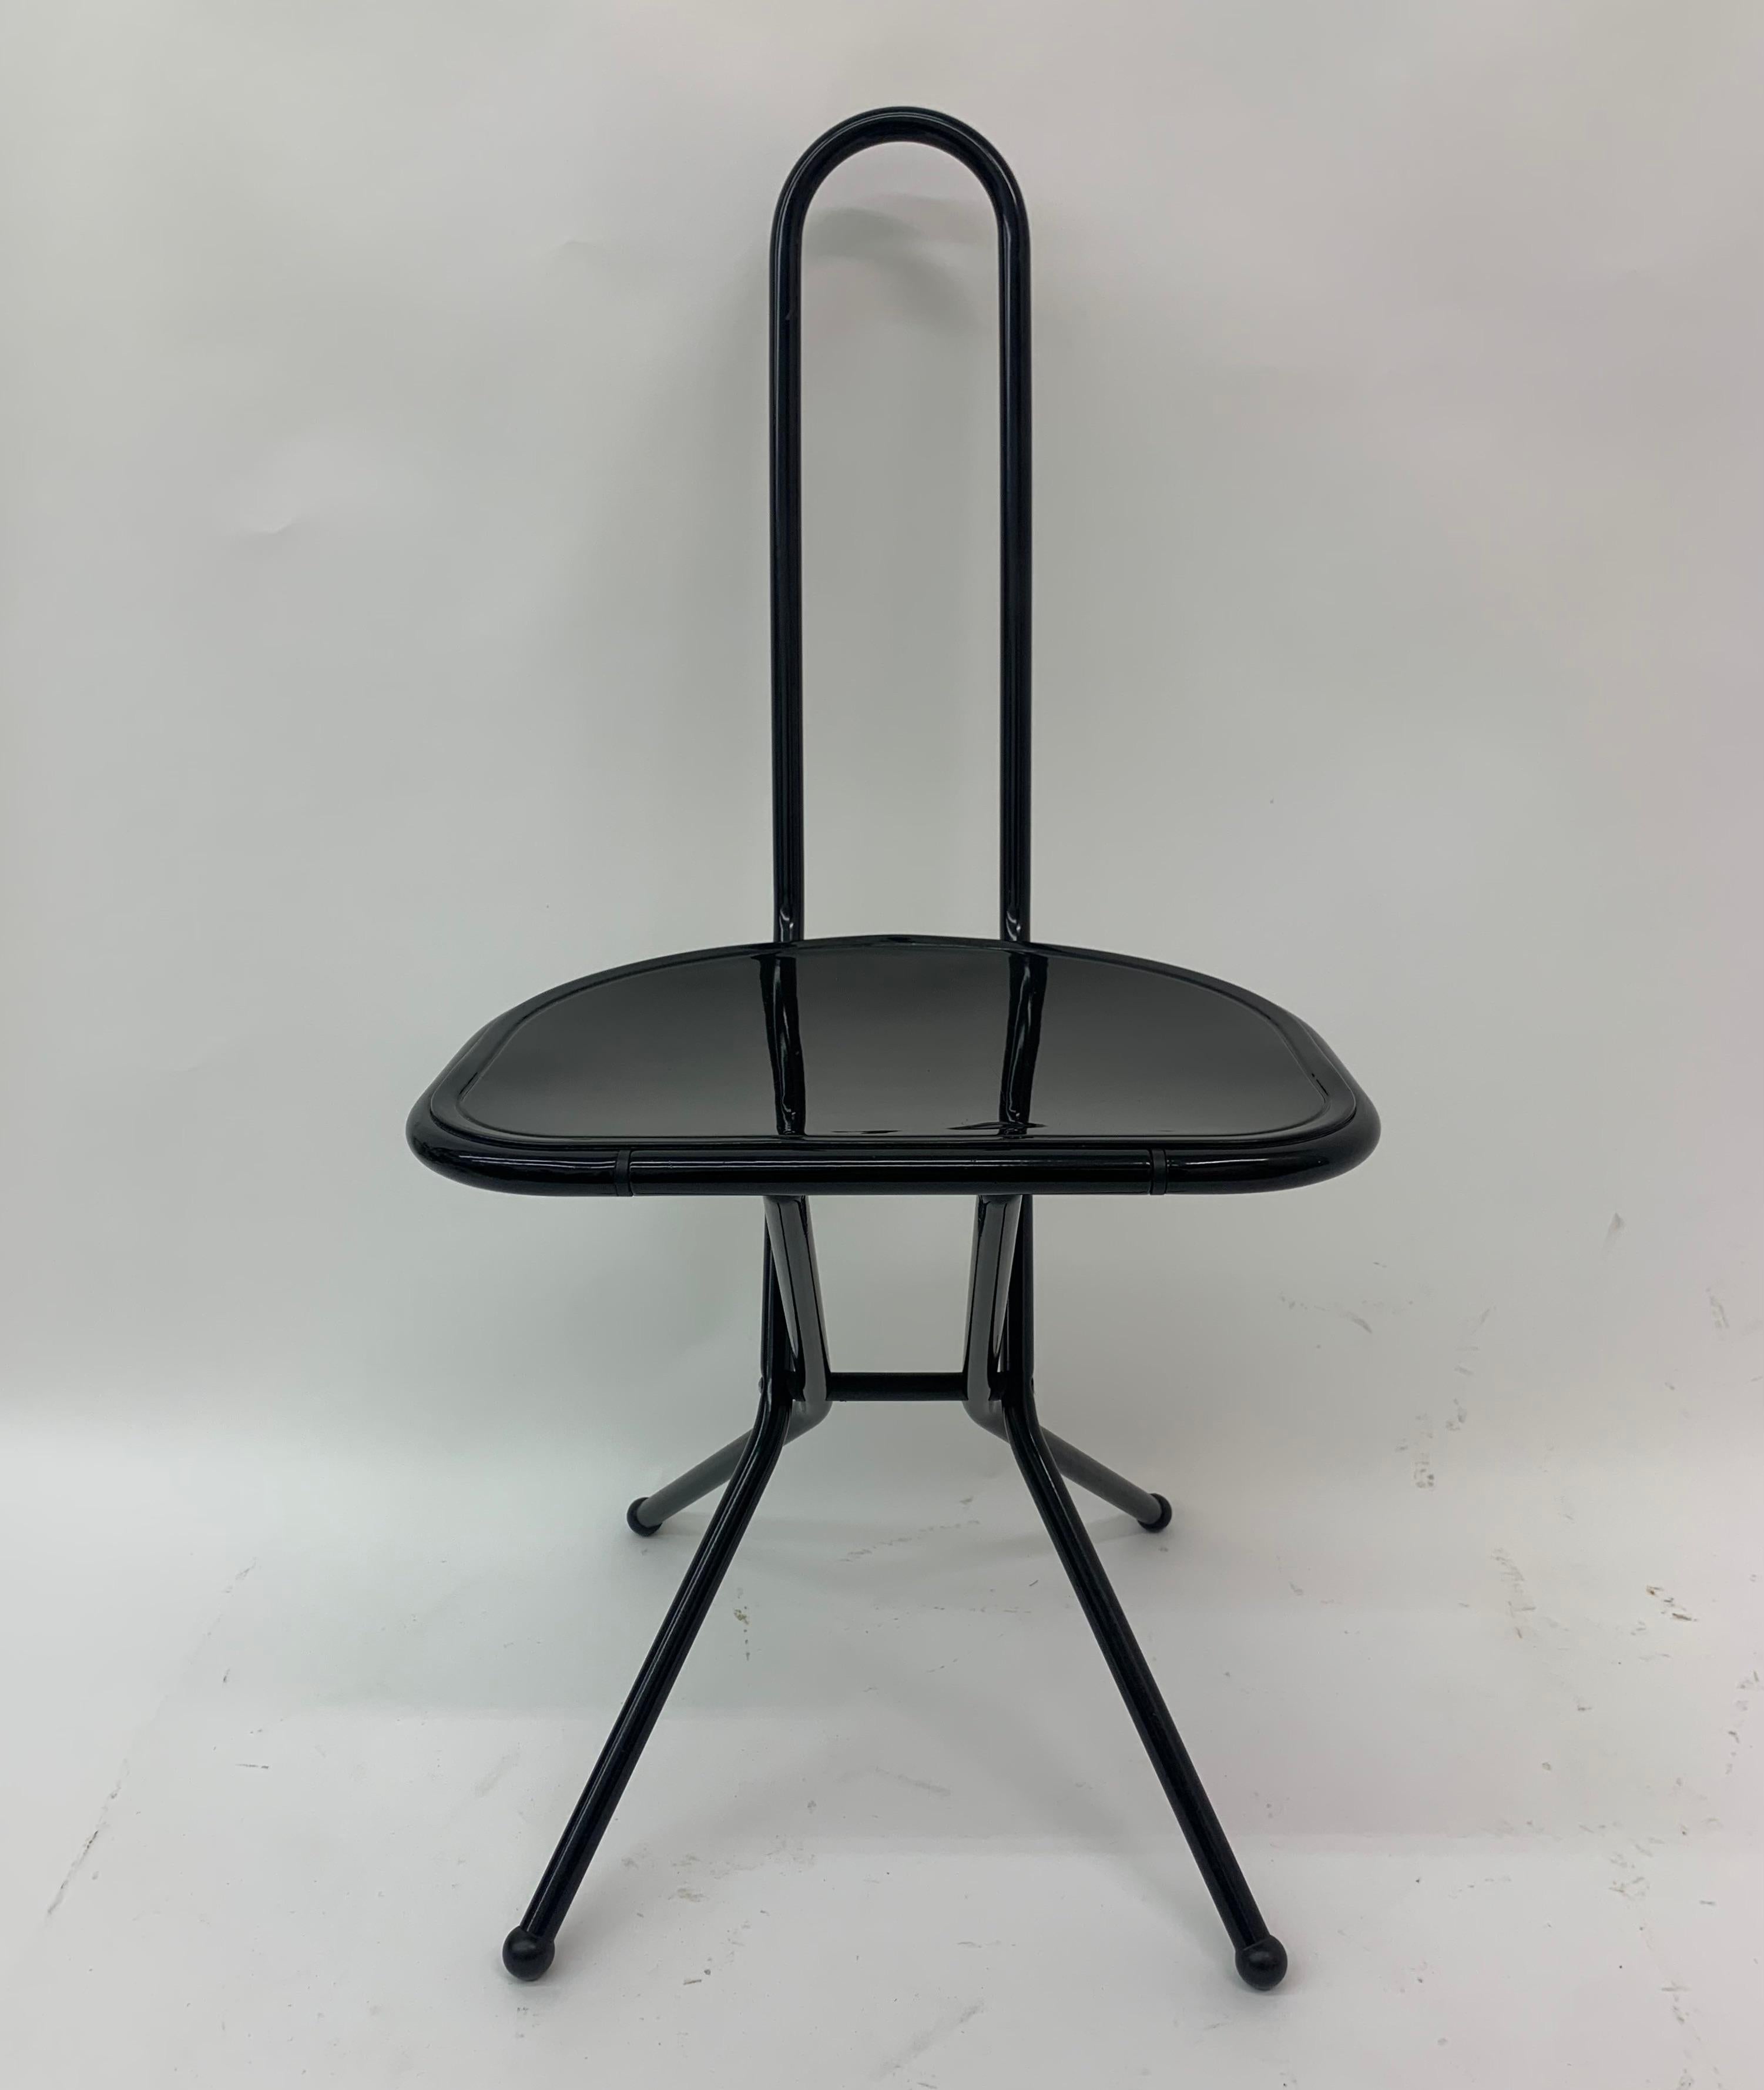 Post modern folding chair by Niels Gammelgaard for Ikea, 1980’s.